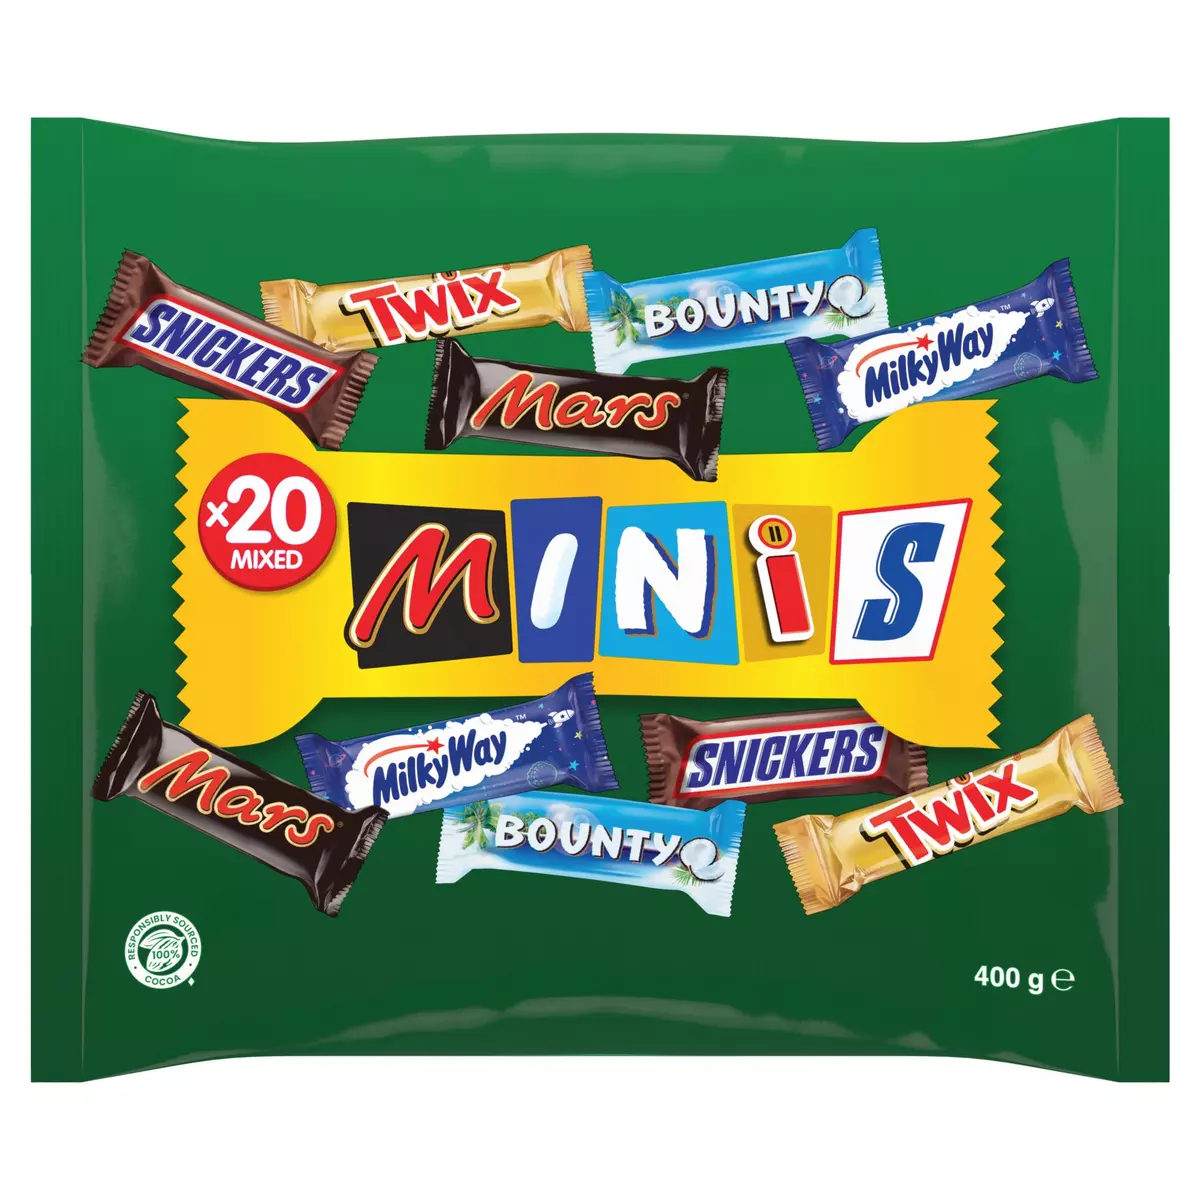 MIXED Minis barres mix mars snickers twix bounty milky way 20 barres 400G